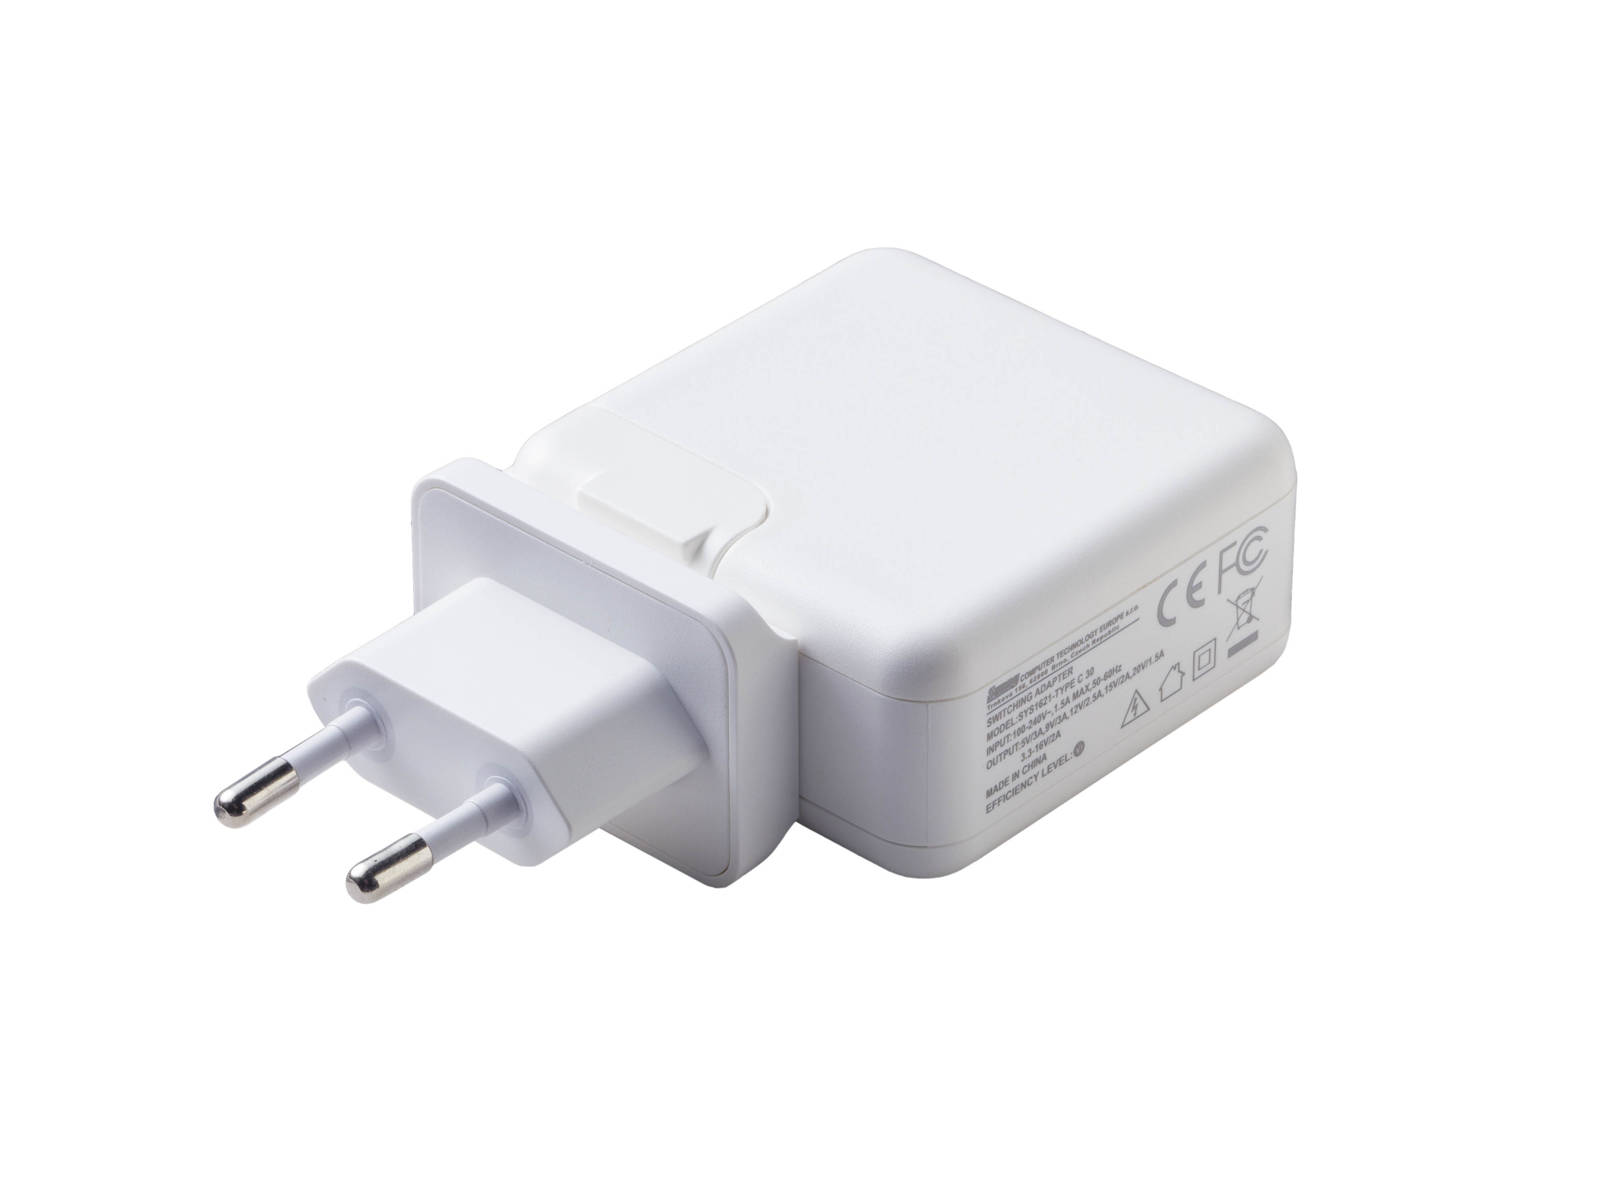 Power adapter USB-C charger 5V/3A, 9V/3A, 12V/2.5A, 15V/2A, 20V